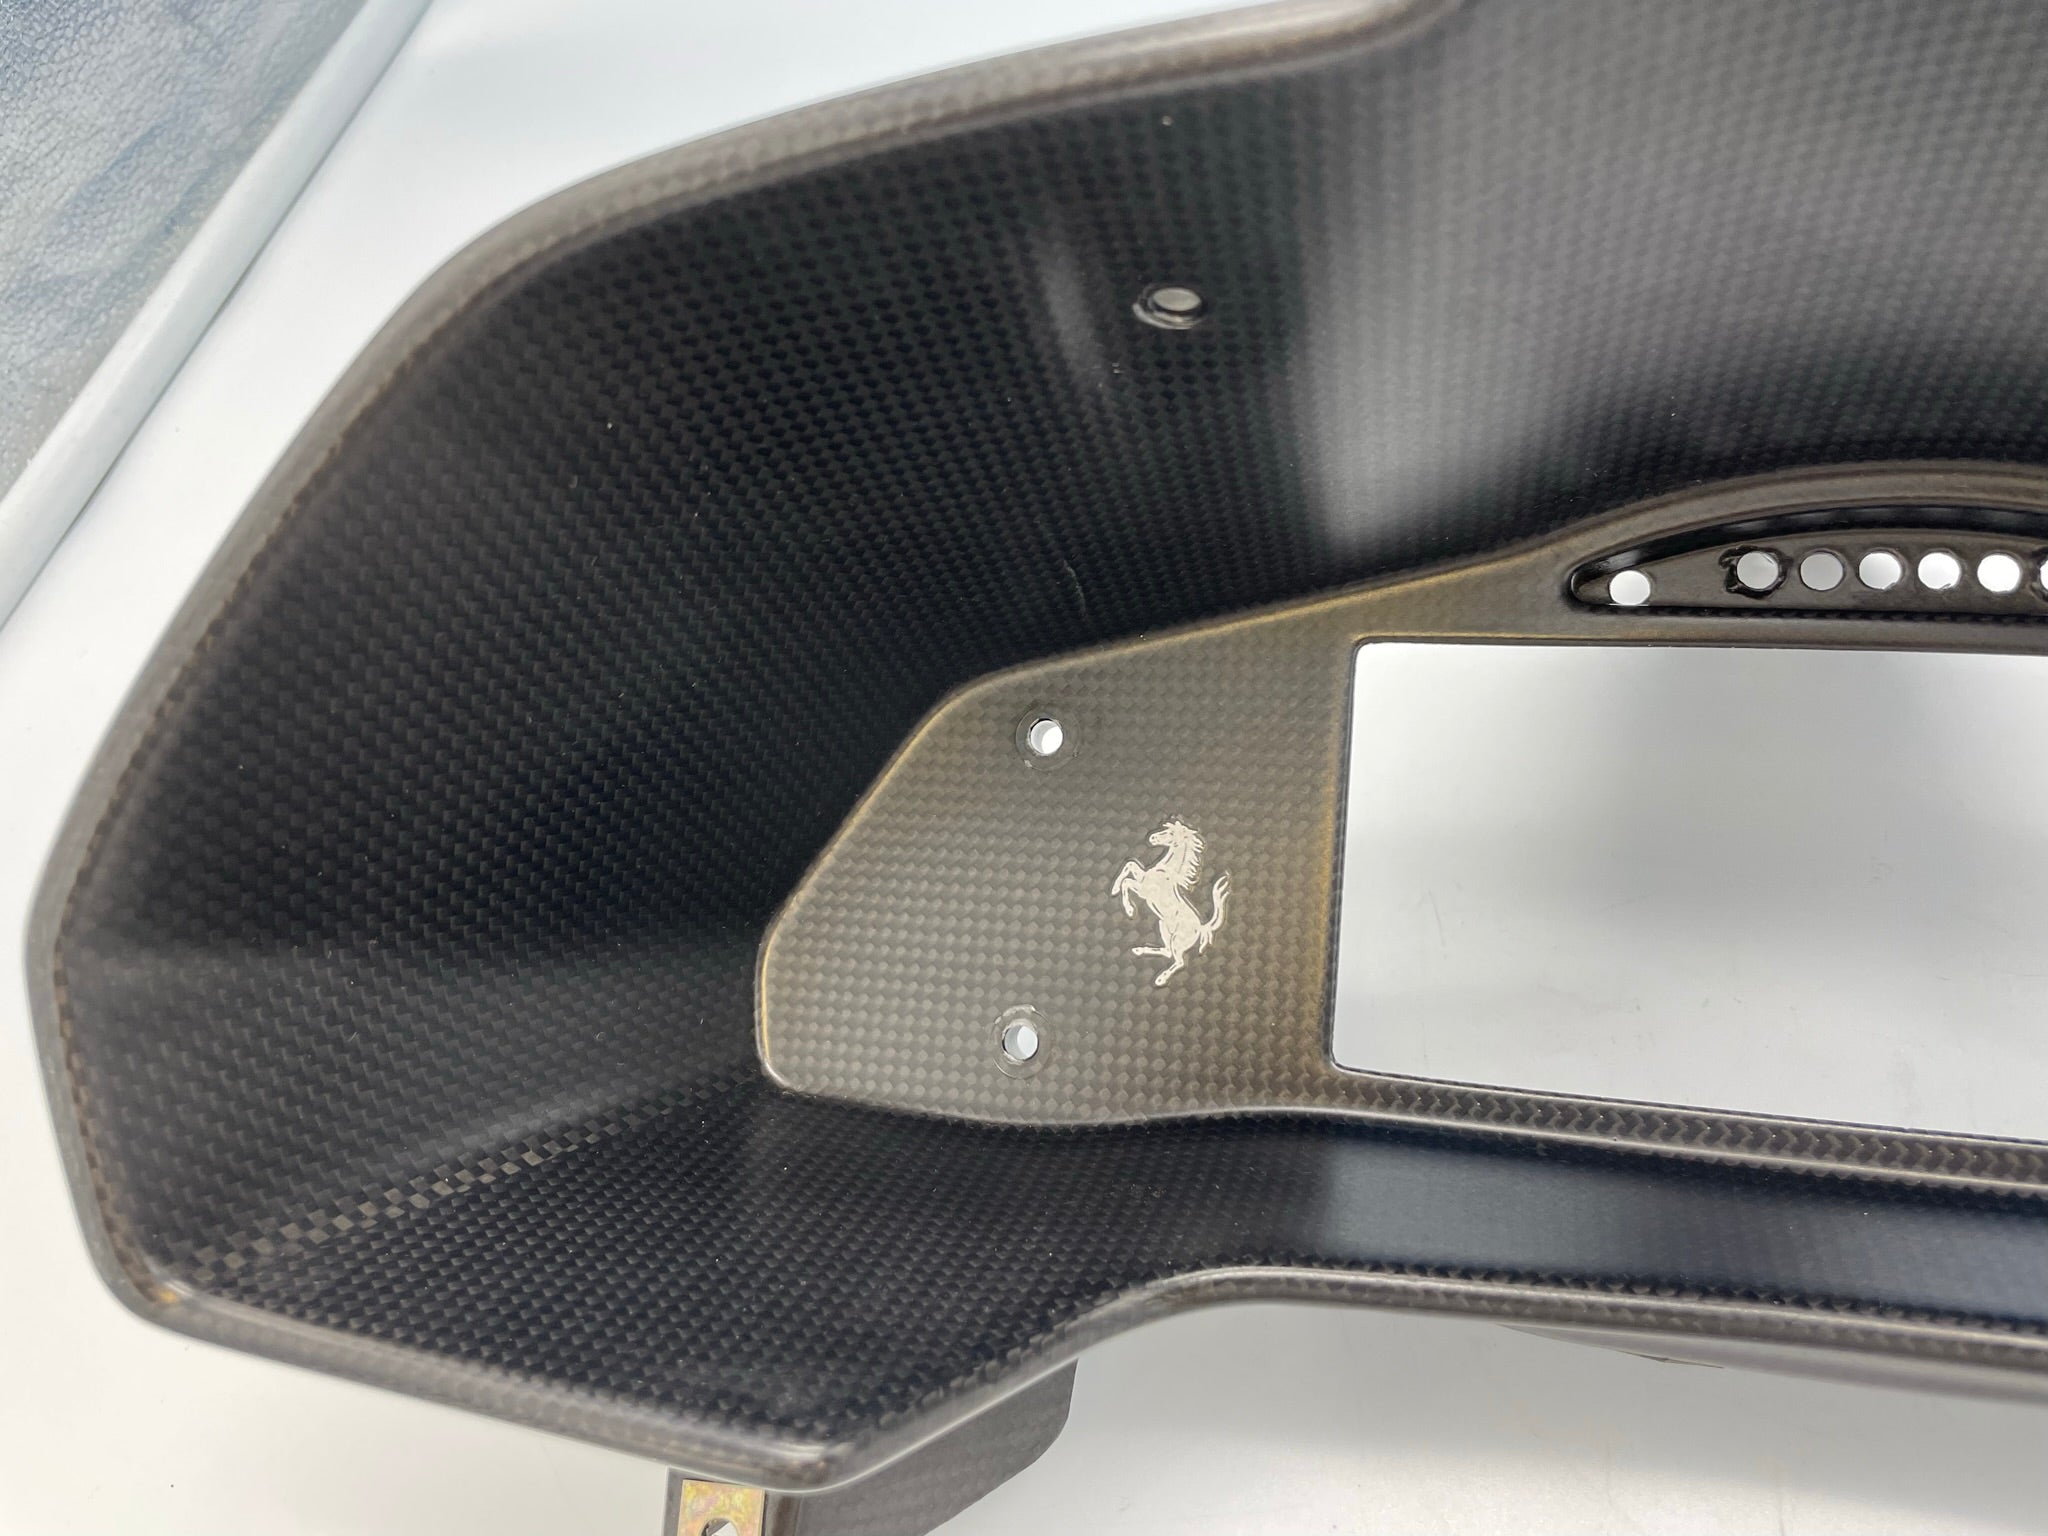 Ferrari 458 Challenge - Instrument Panel - Carbon Fiber - Part No. 83507800